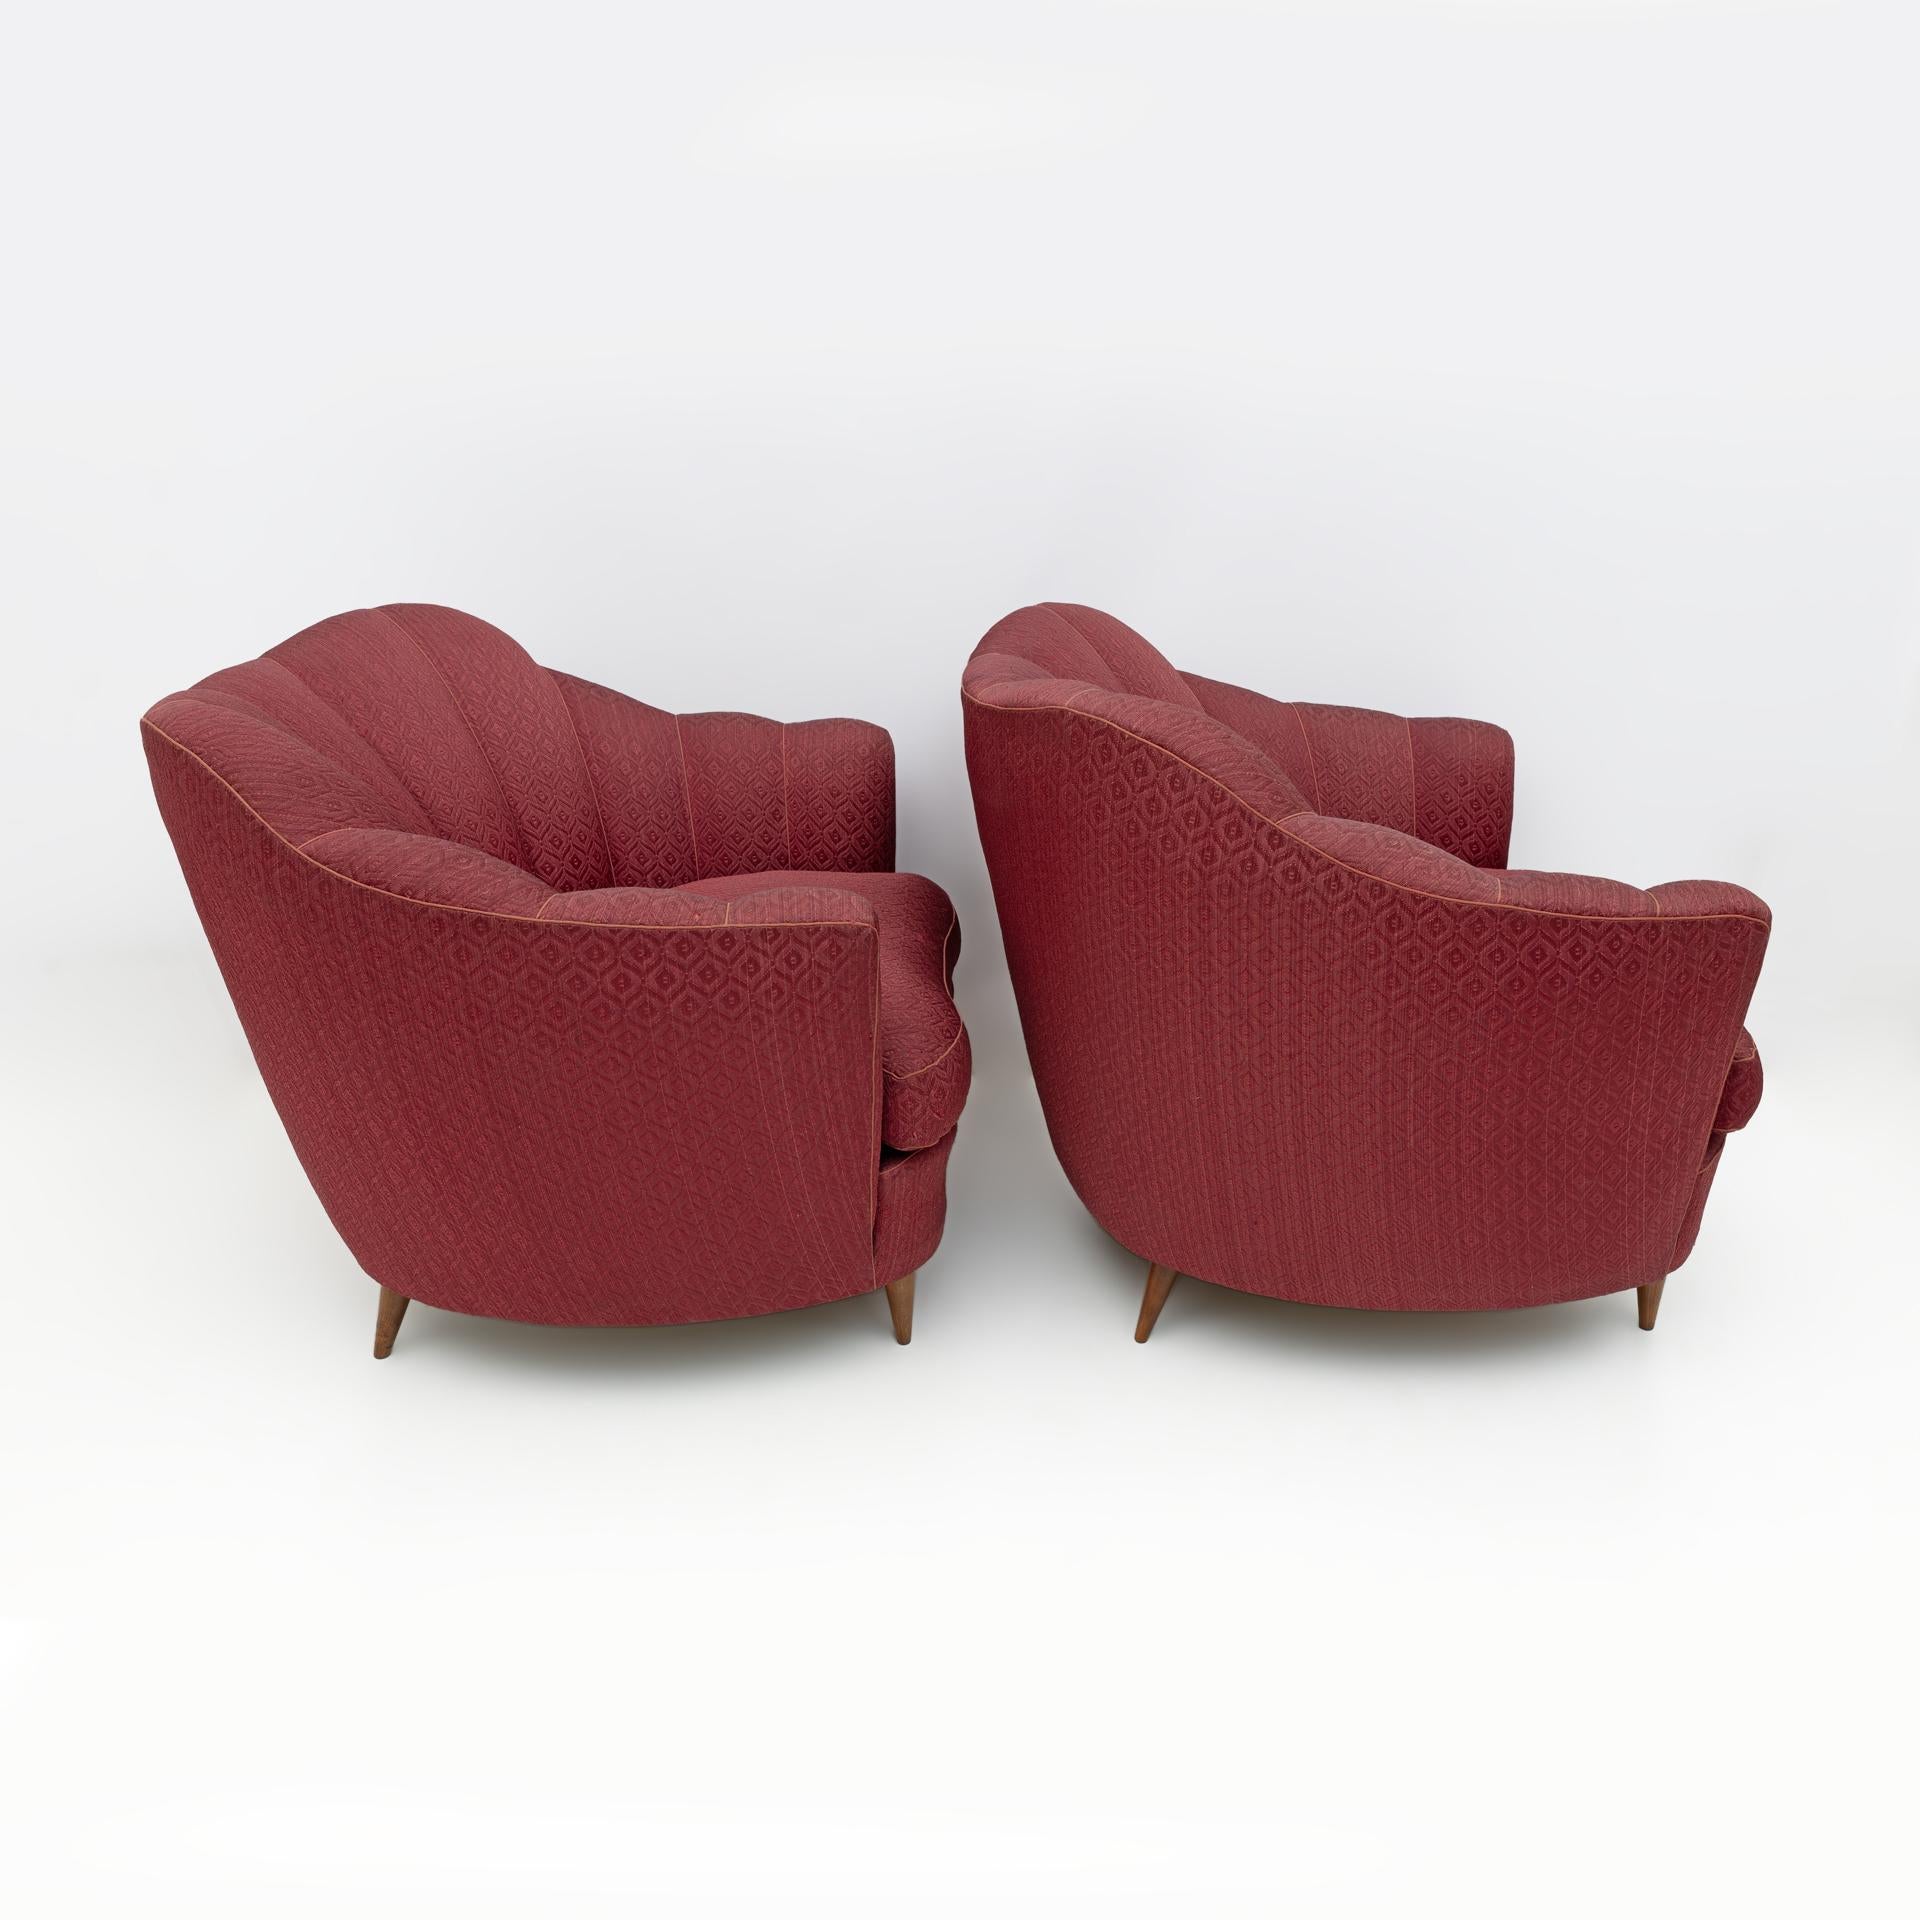 Pair of Gio Ponti Mid-Century Modern Velvet Armchairs for Casa e Giardino, 1950s For Sale 2